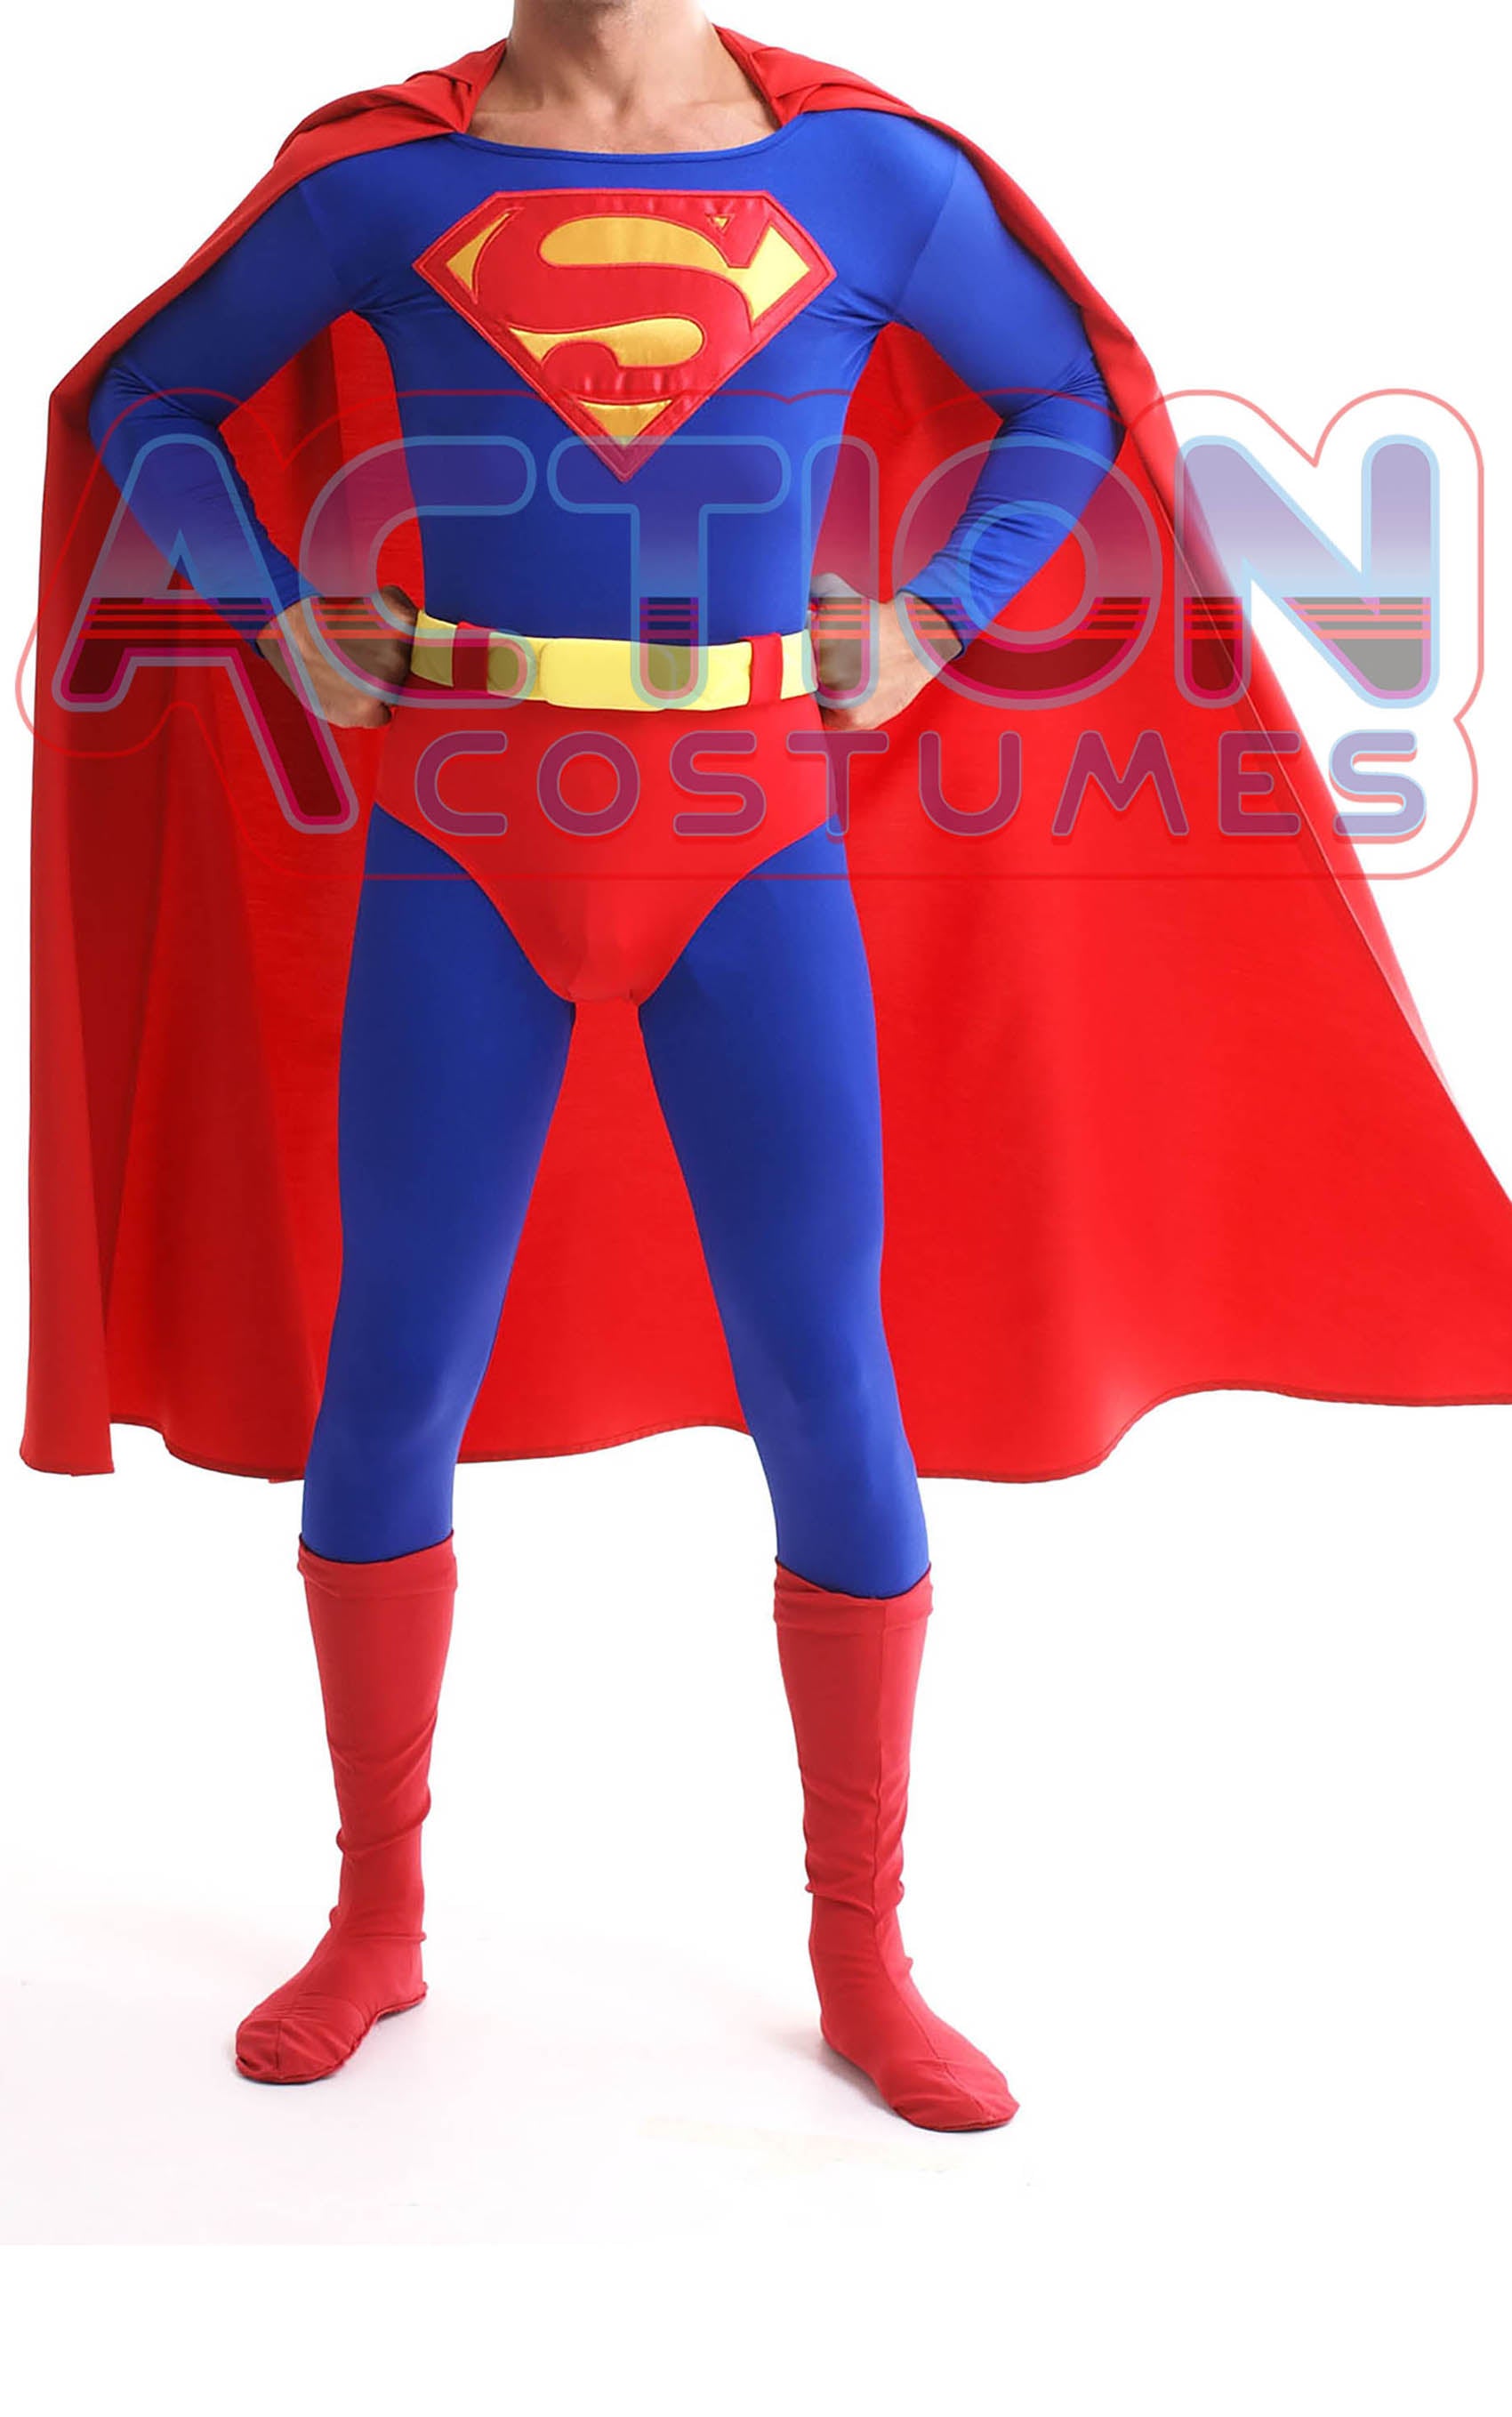 superman-costume-90s-style